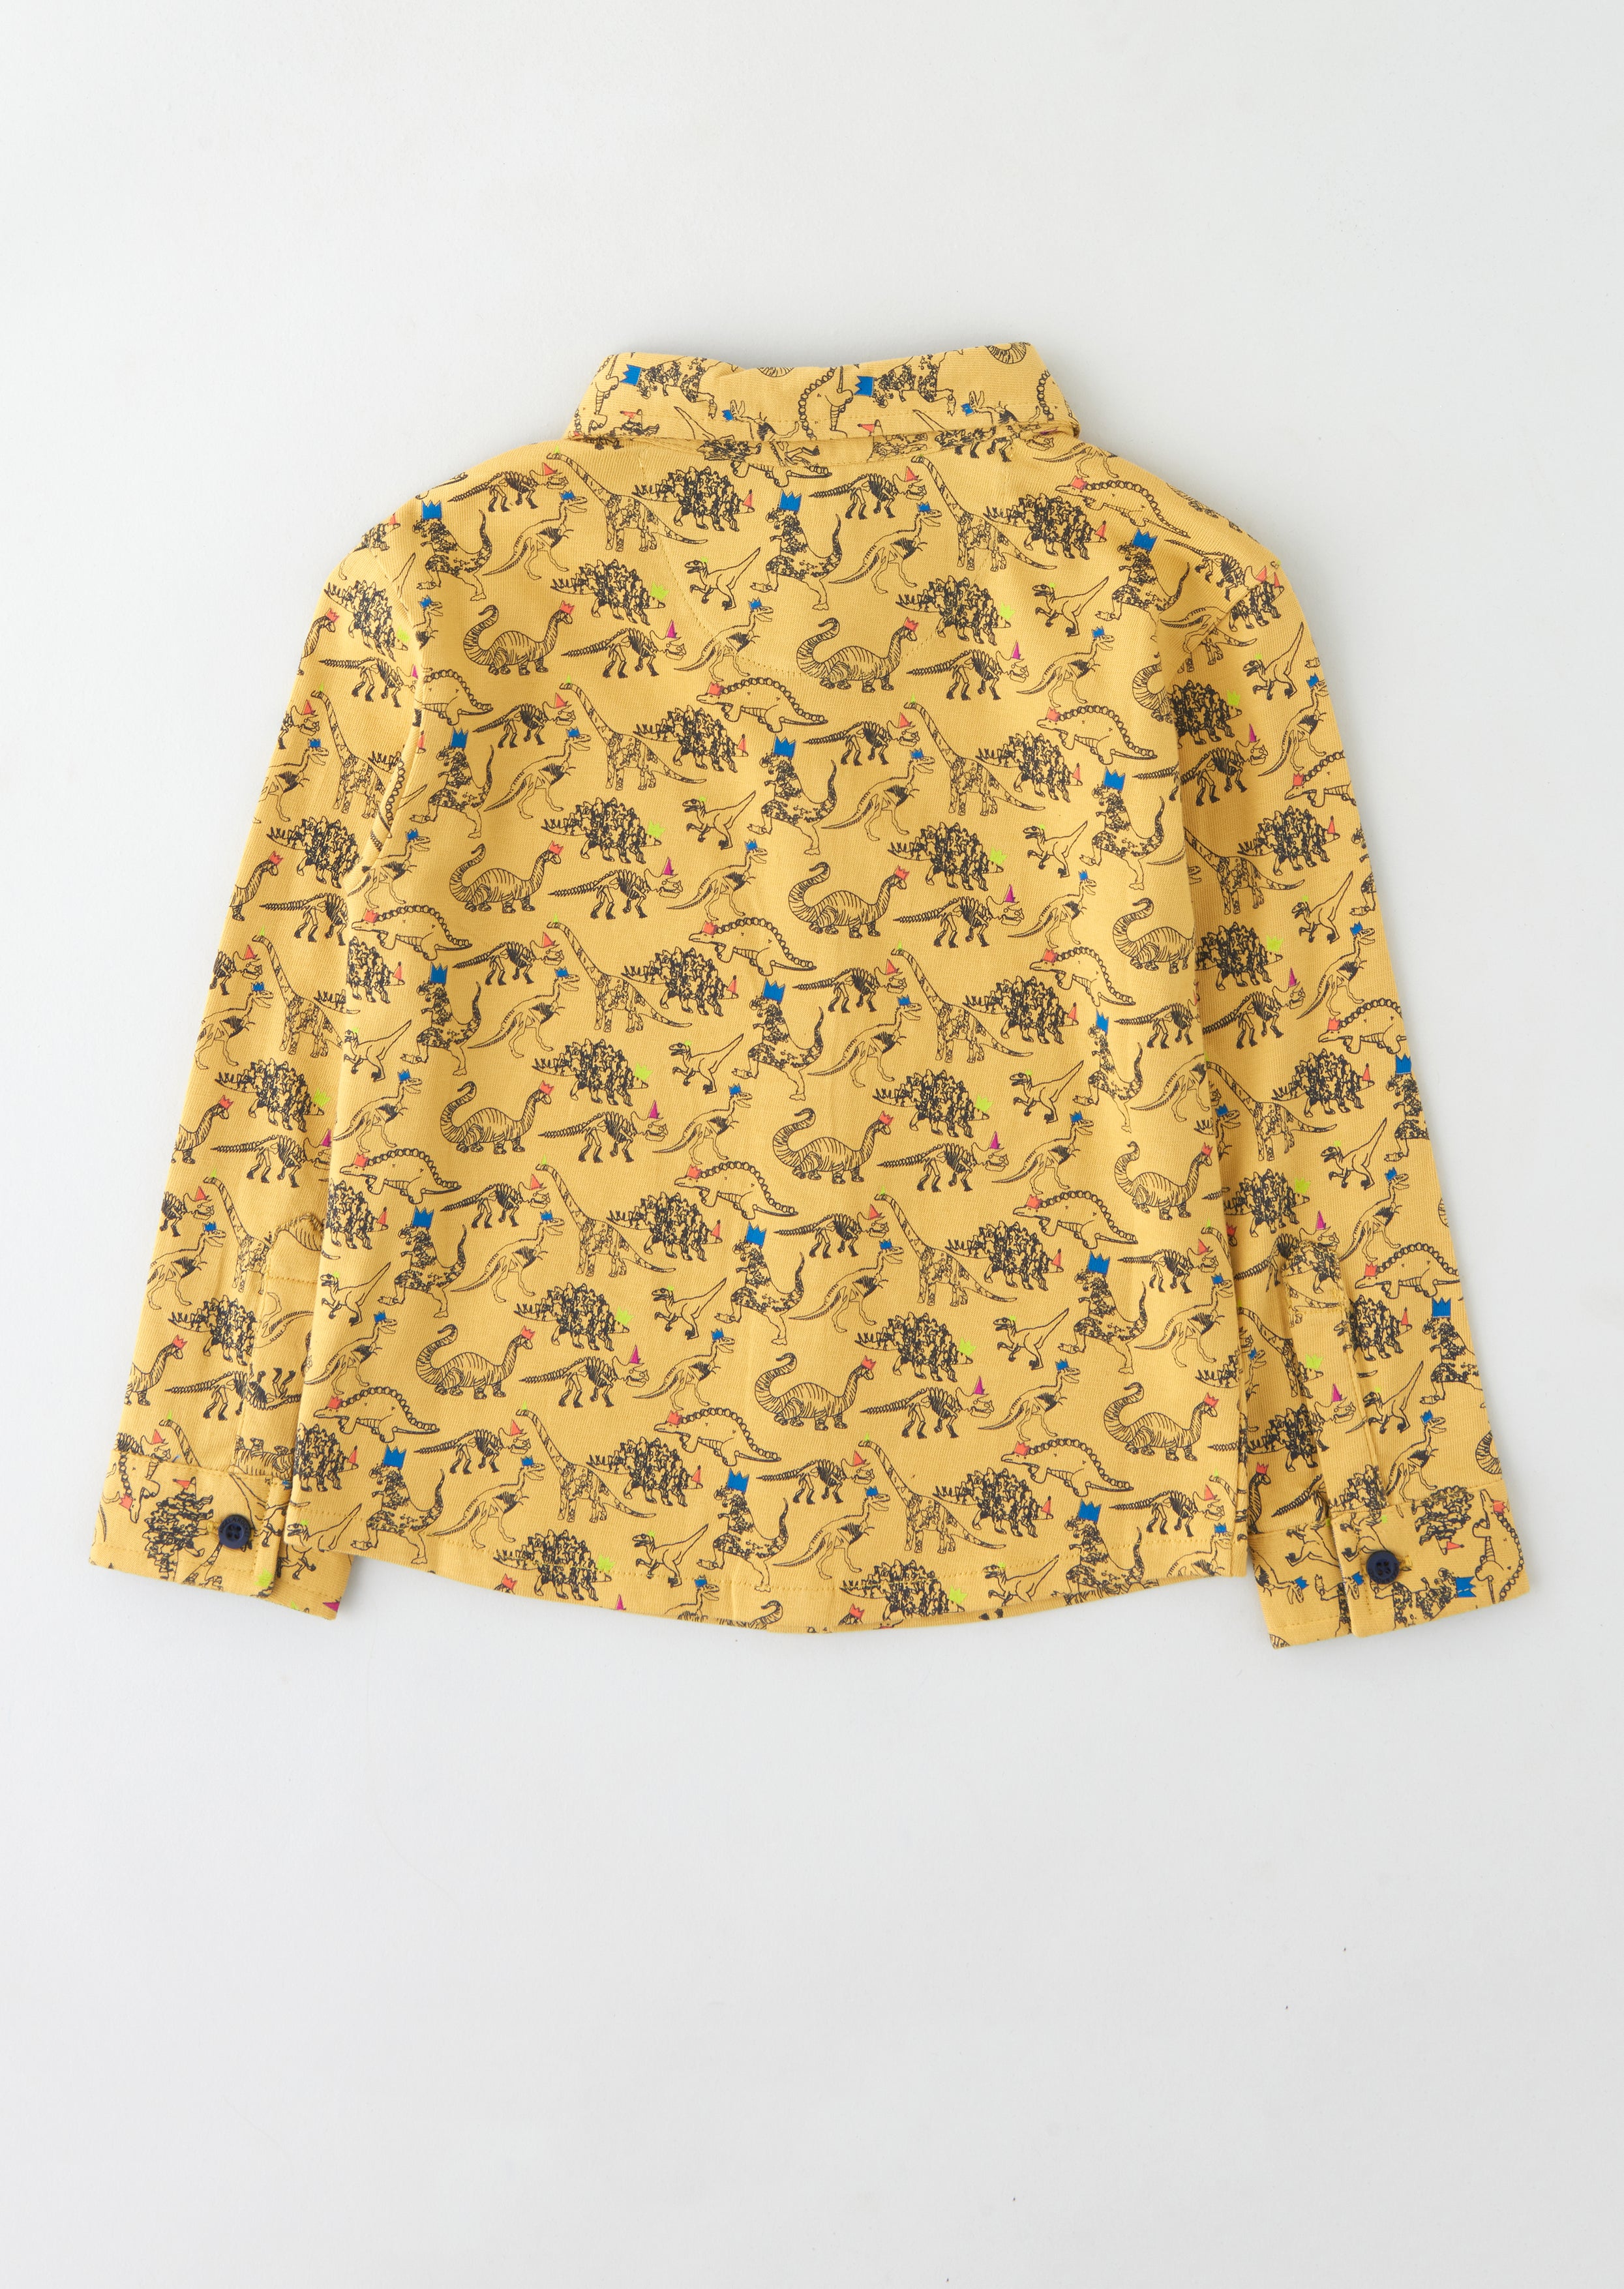 Boys Dinosaur Printed Full Sleeves Yellow Shirt